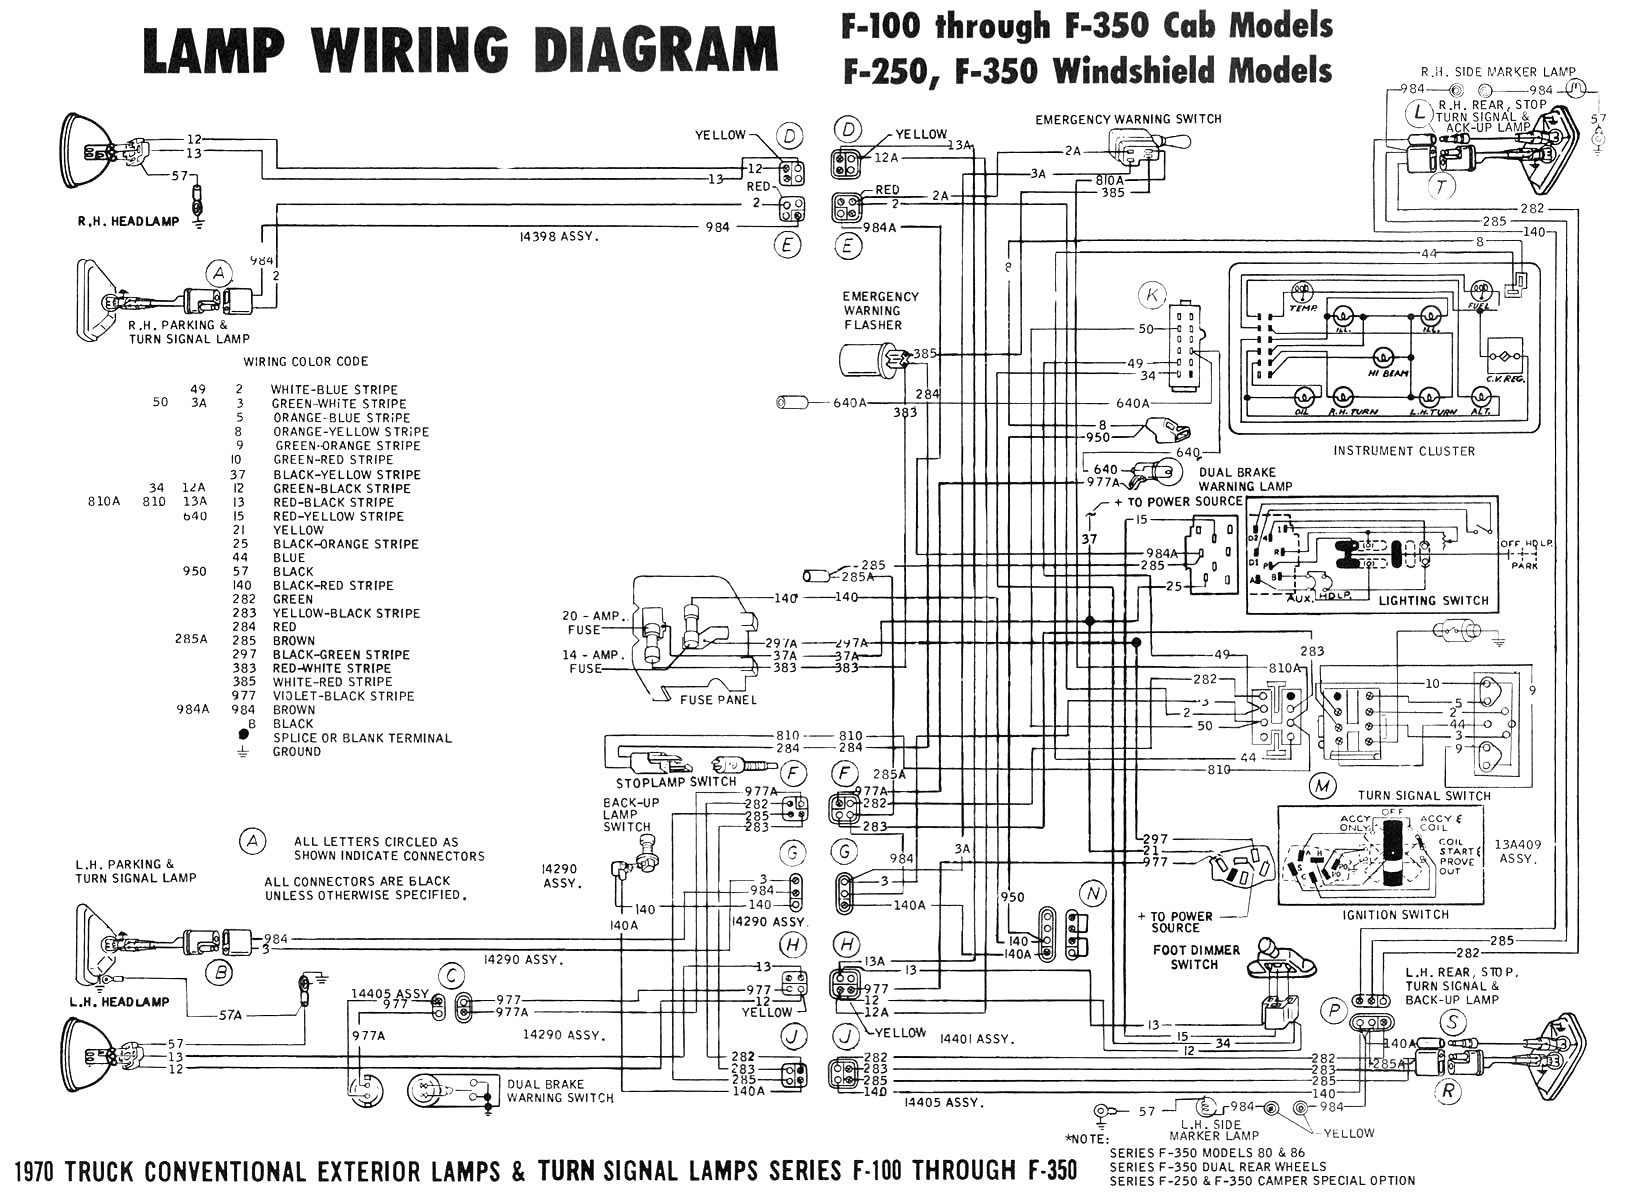 2005 F150 Wiring Diagram 450 ford Electrical Wiring 2005 Wiring Diagram Sheet